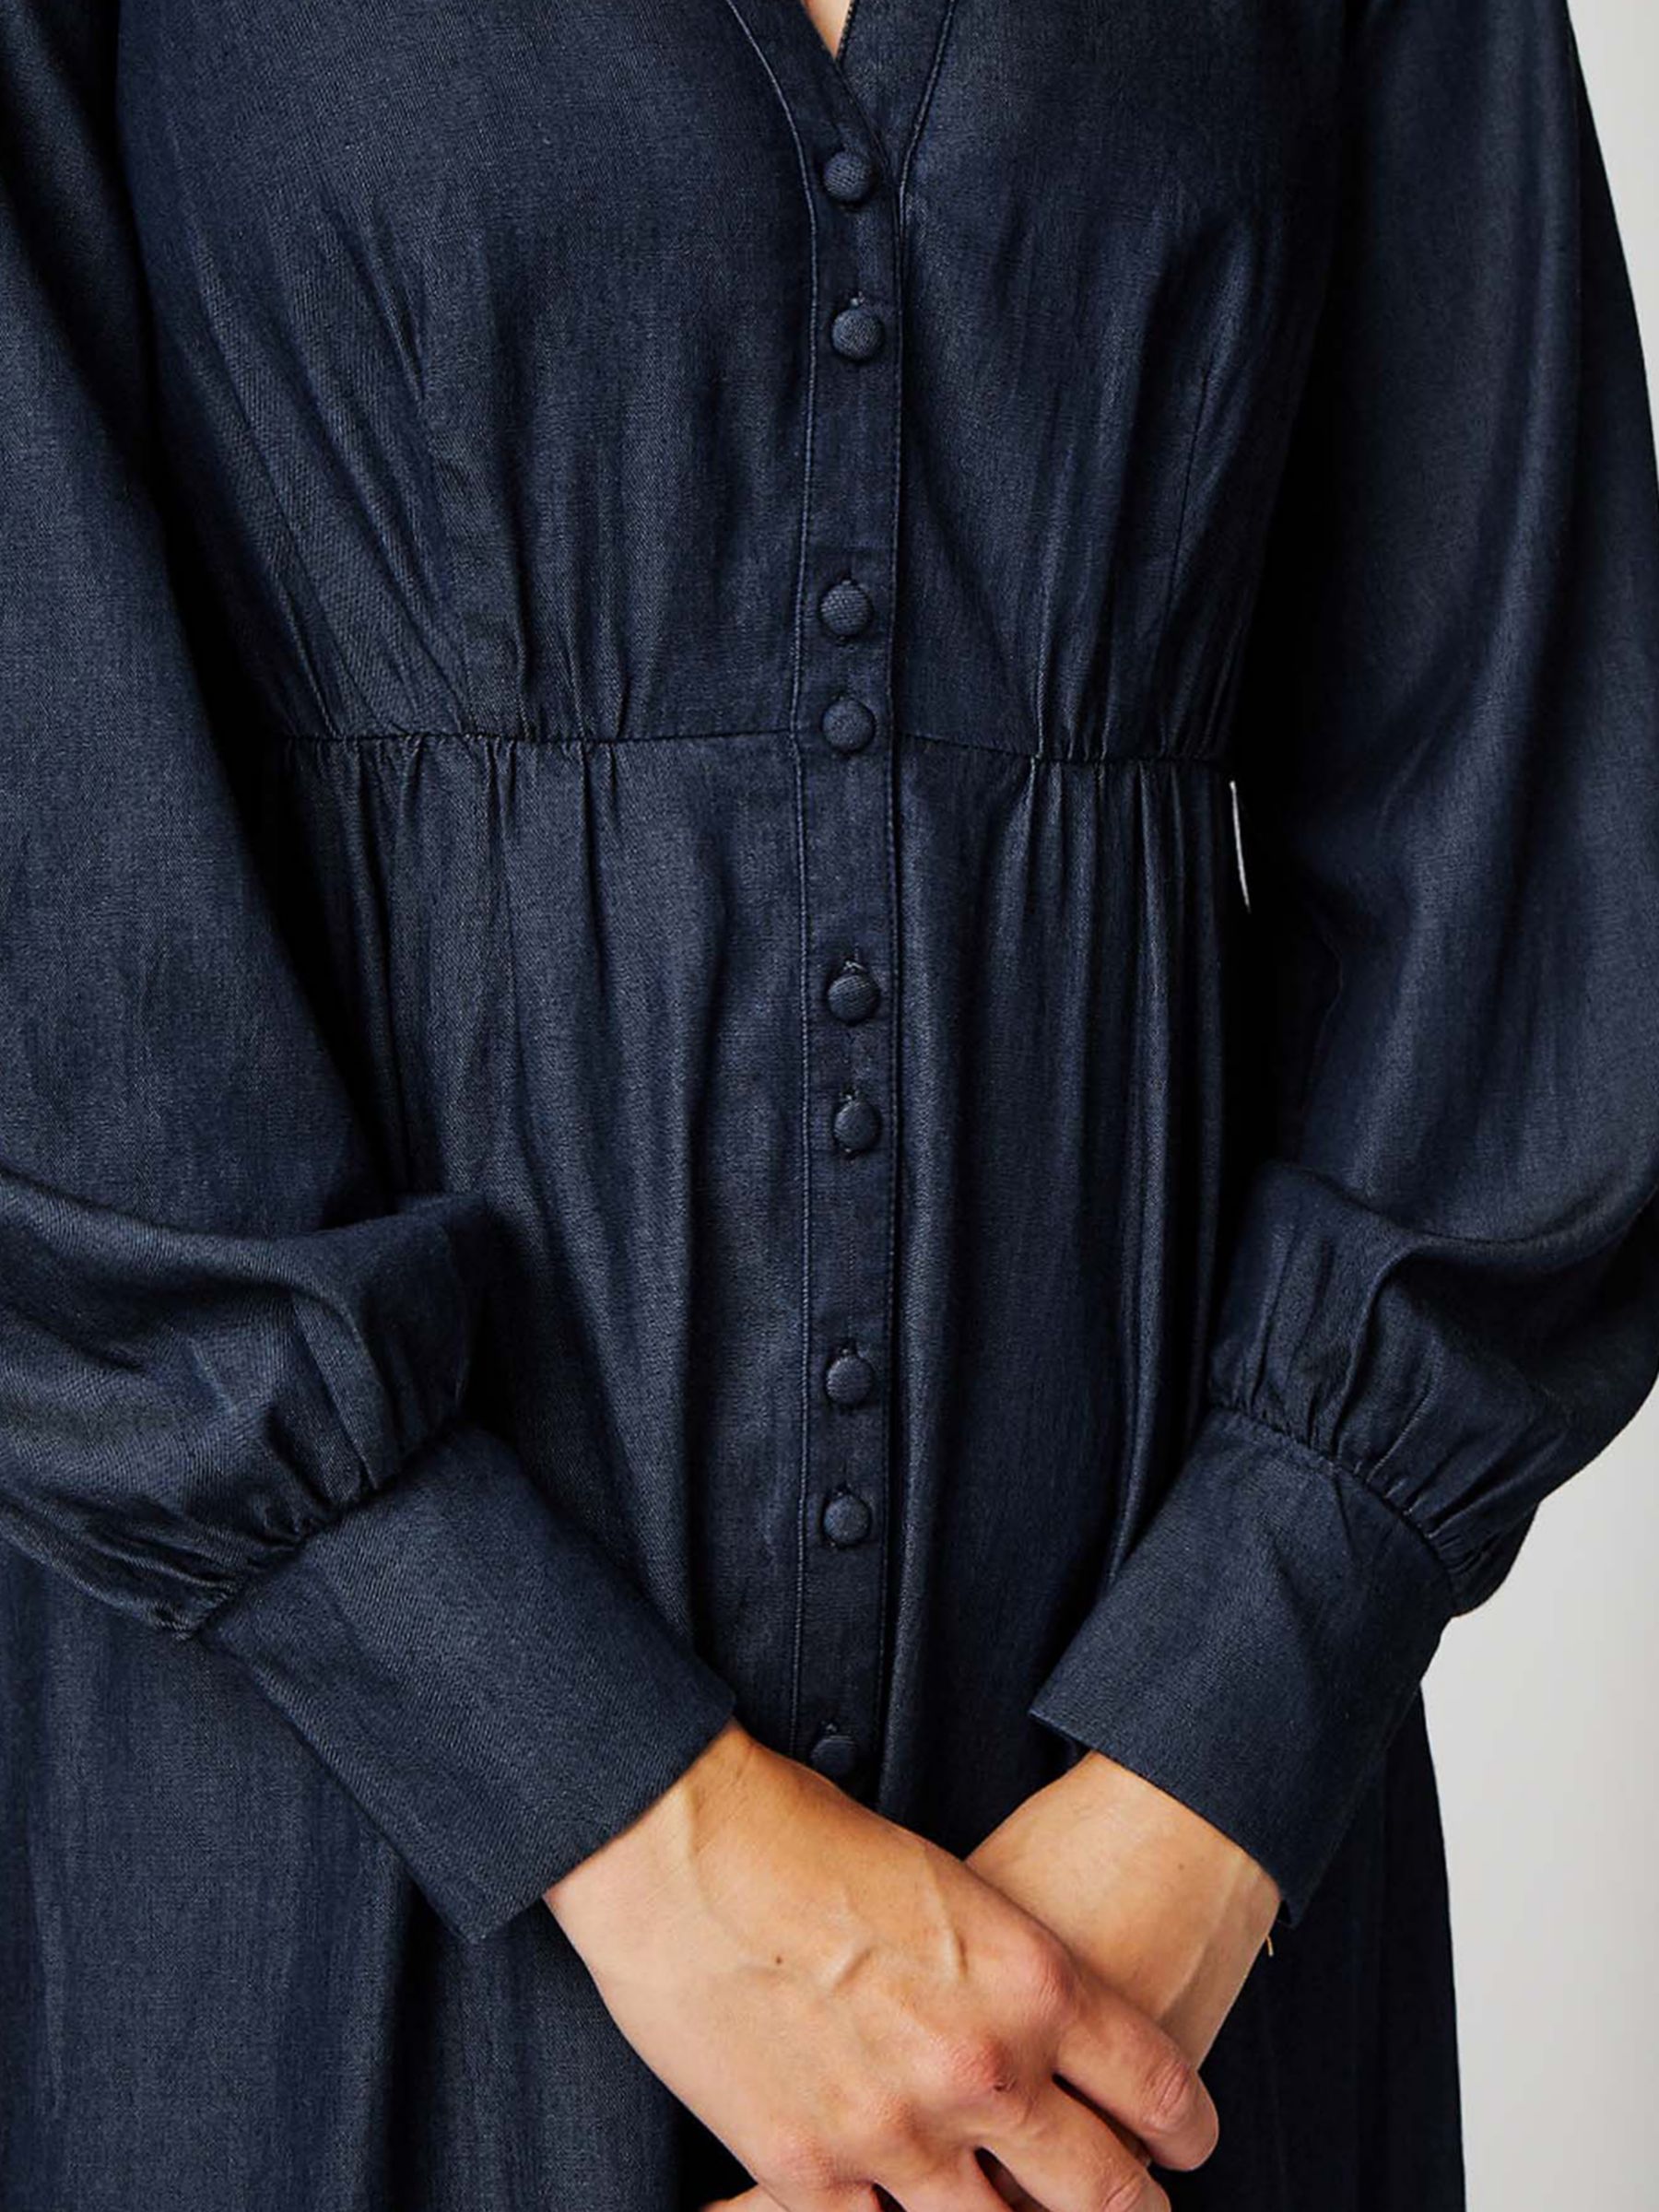 Aspiga Trinity Tencel Denim Midi Dress, Dark Wash at John Lewis & Partners